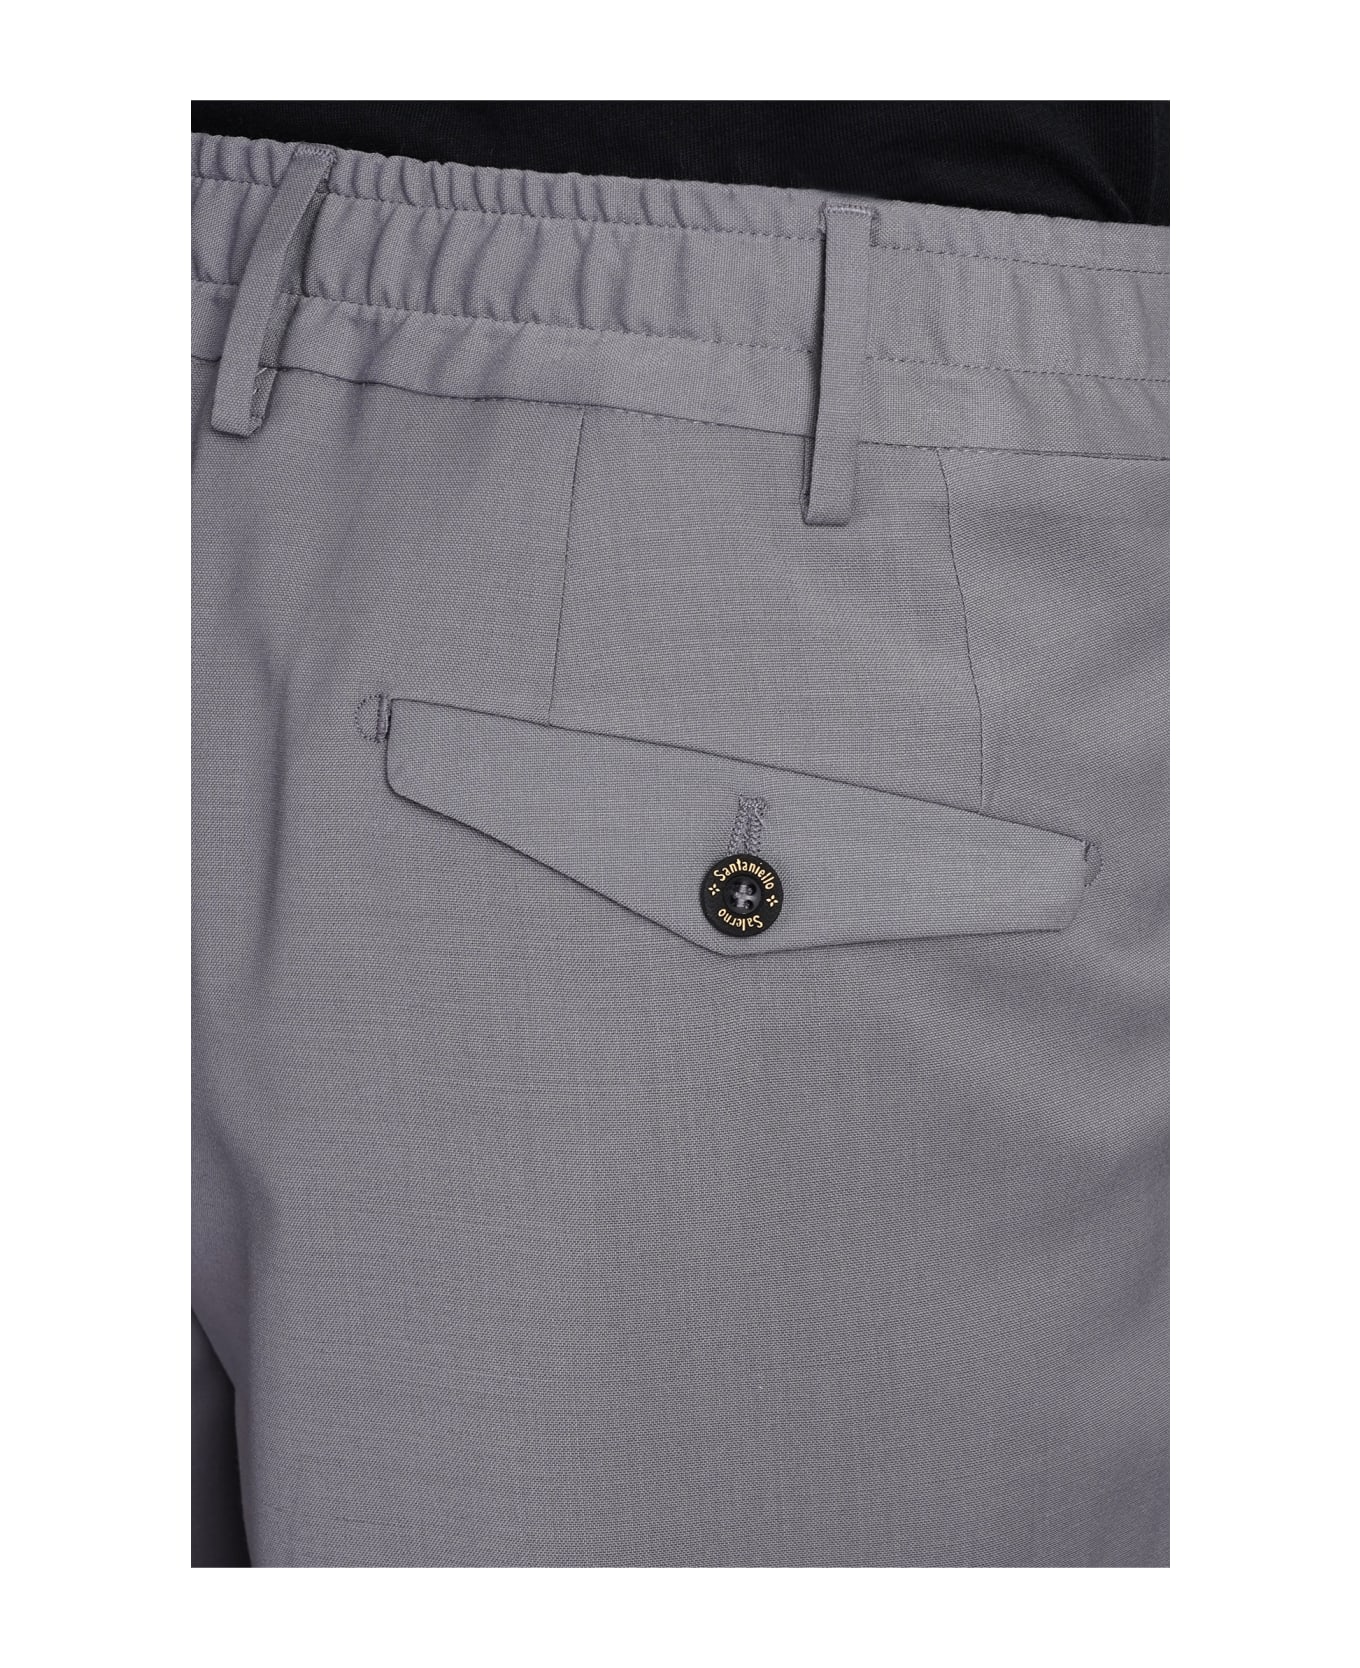 Santaniello Pants In Grey Polyester - grey